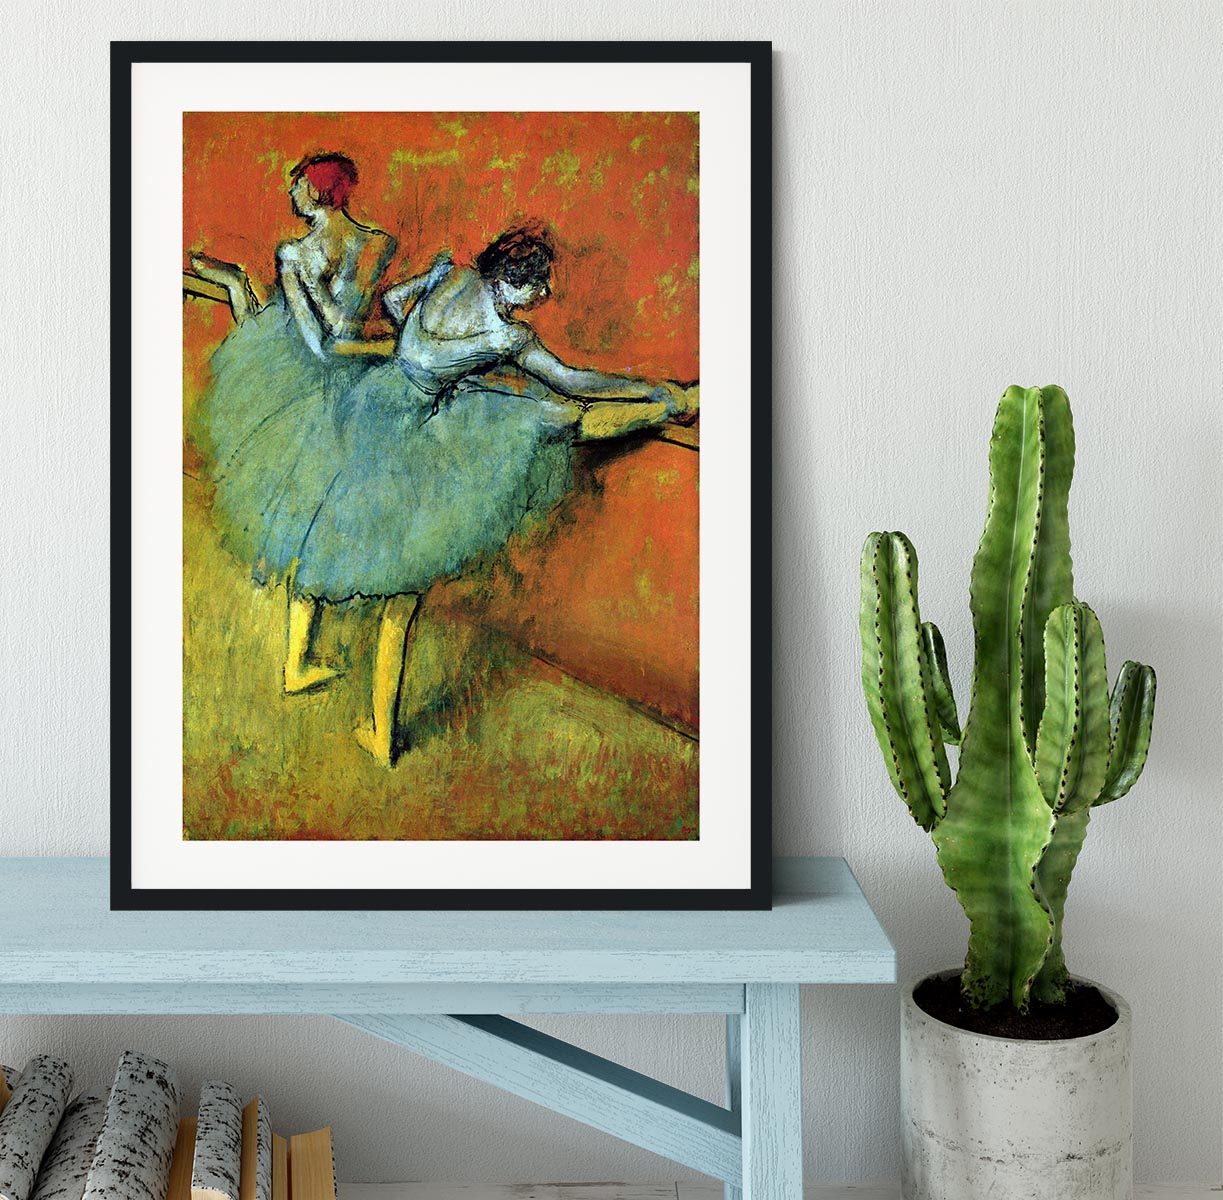 Dancers at the bar 1 by Degas Framed Print - Canvas Art Rocks - 1